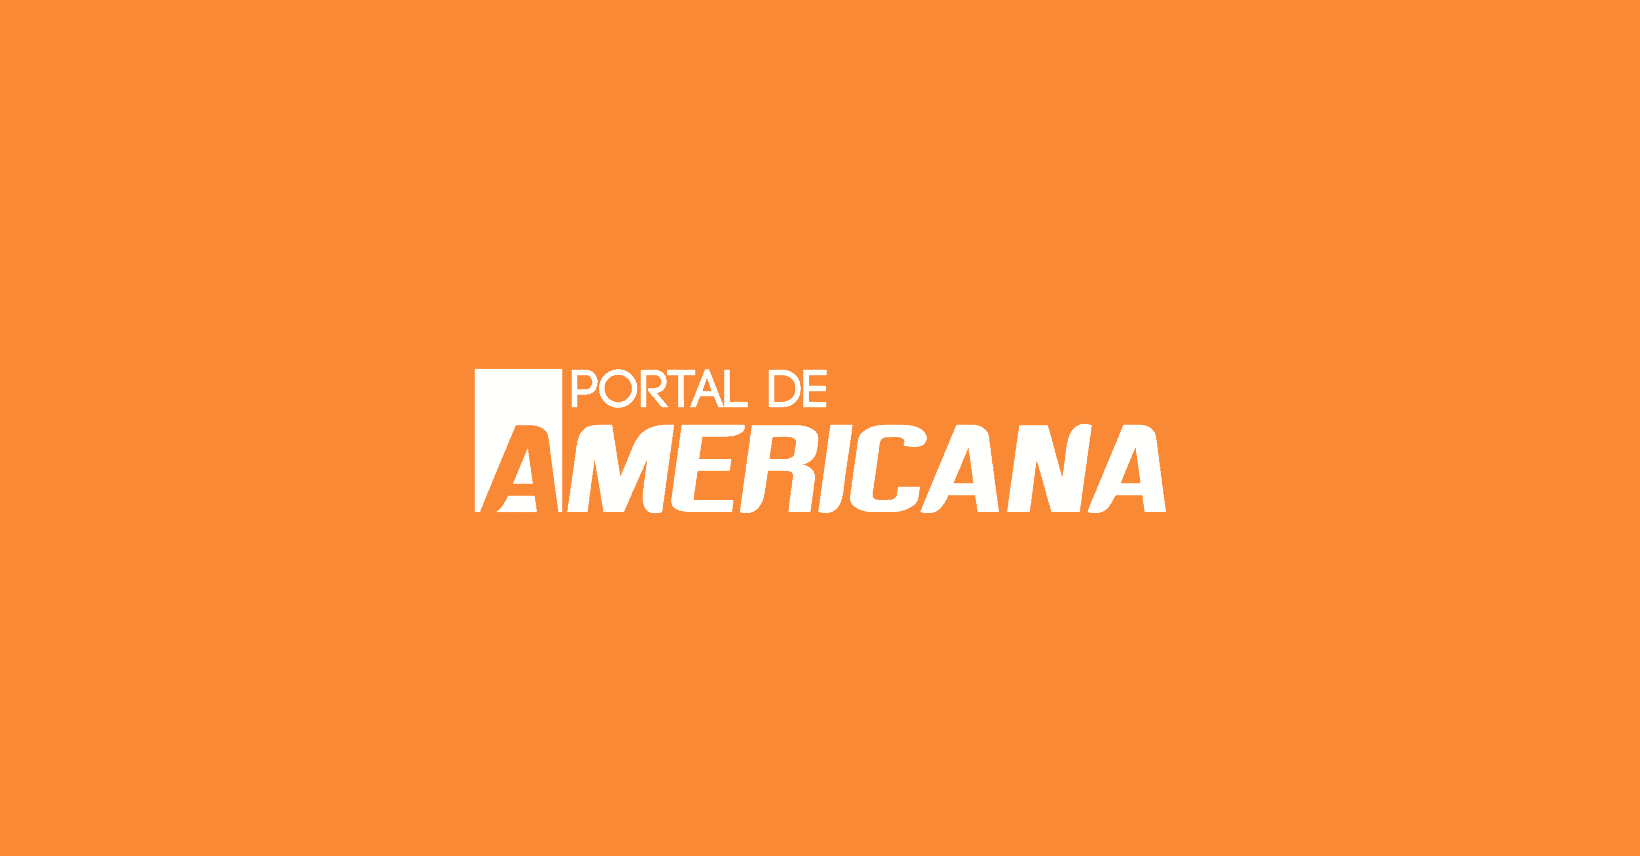 (c) Portaldeamericana.com